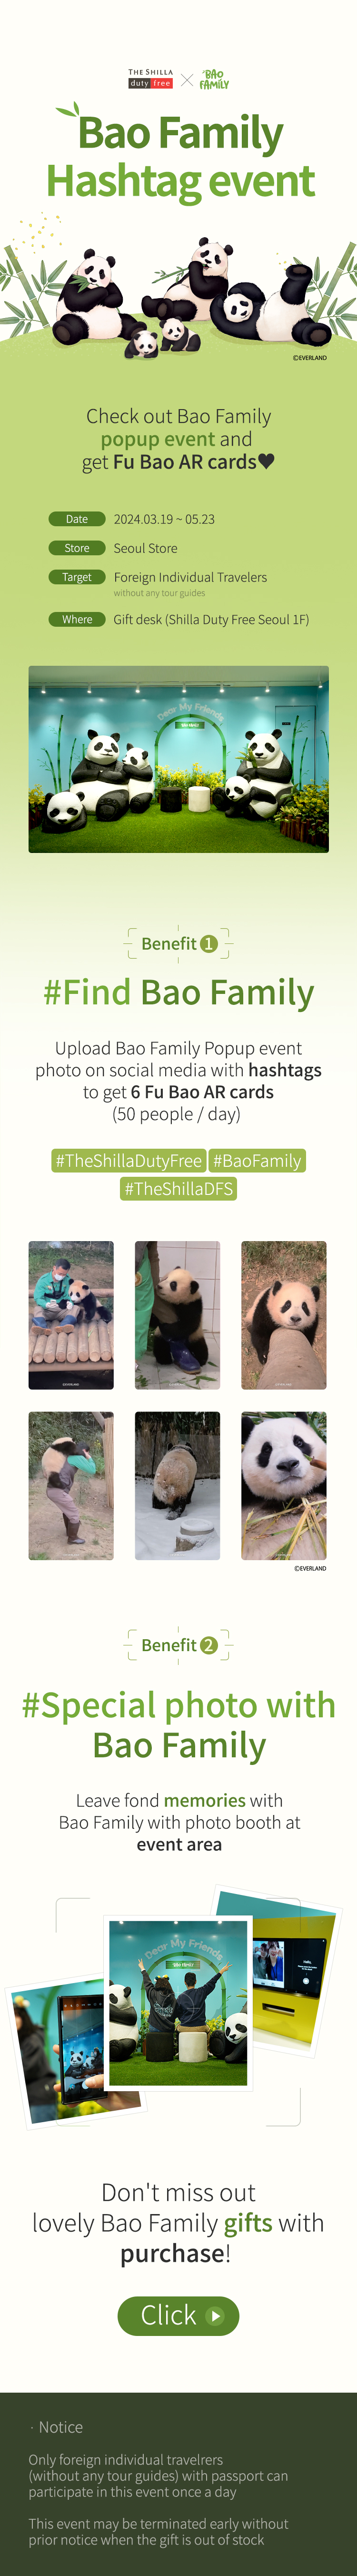 Bao Family Hashtag event